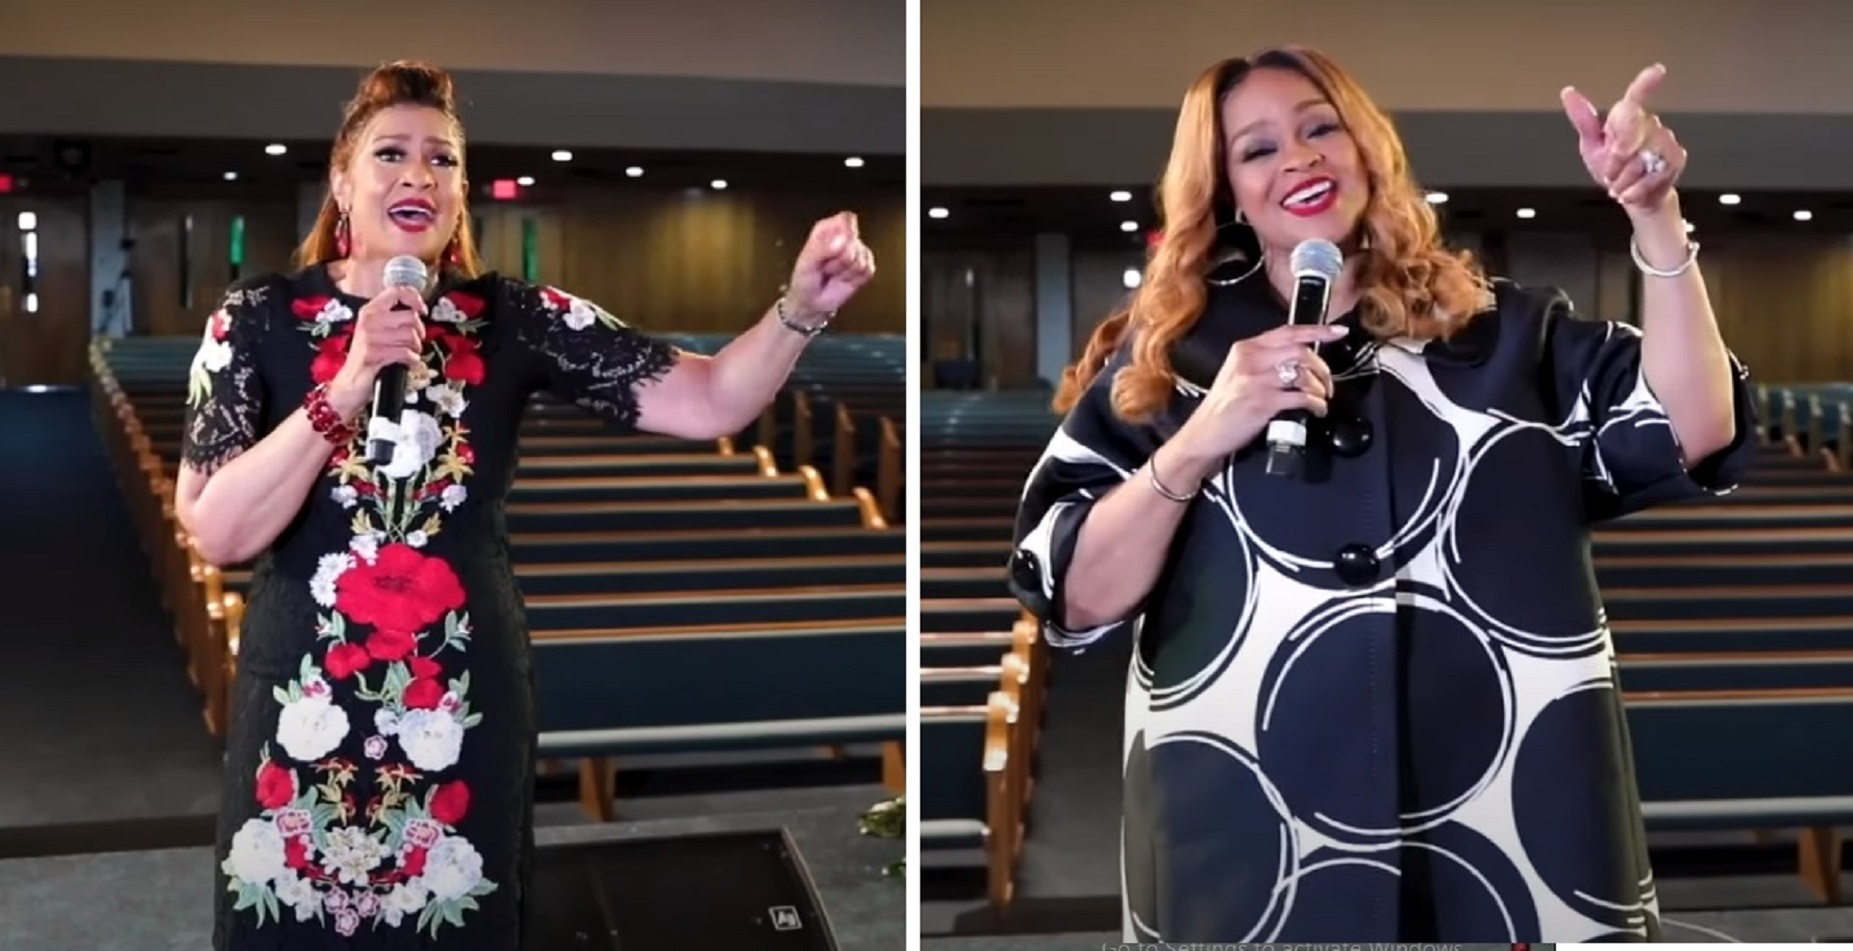 Watch: Gospel Legend The Clark Sisters Perform Inspiring Medley on ‘Kimmel’